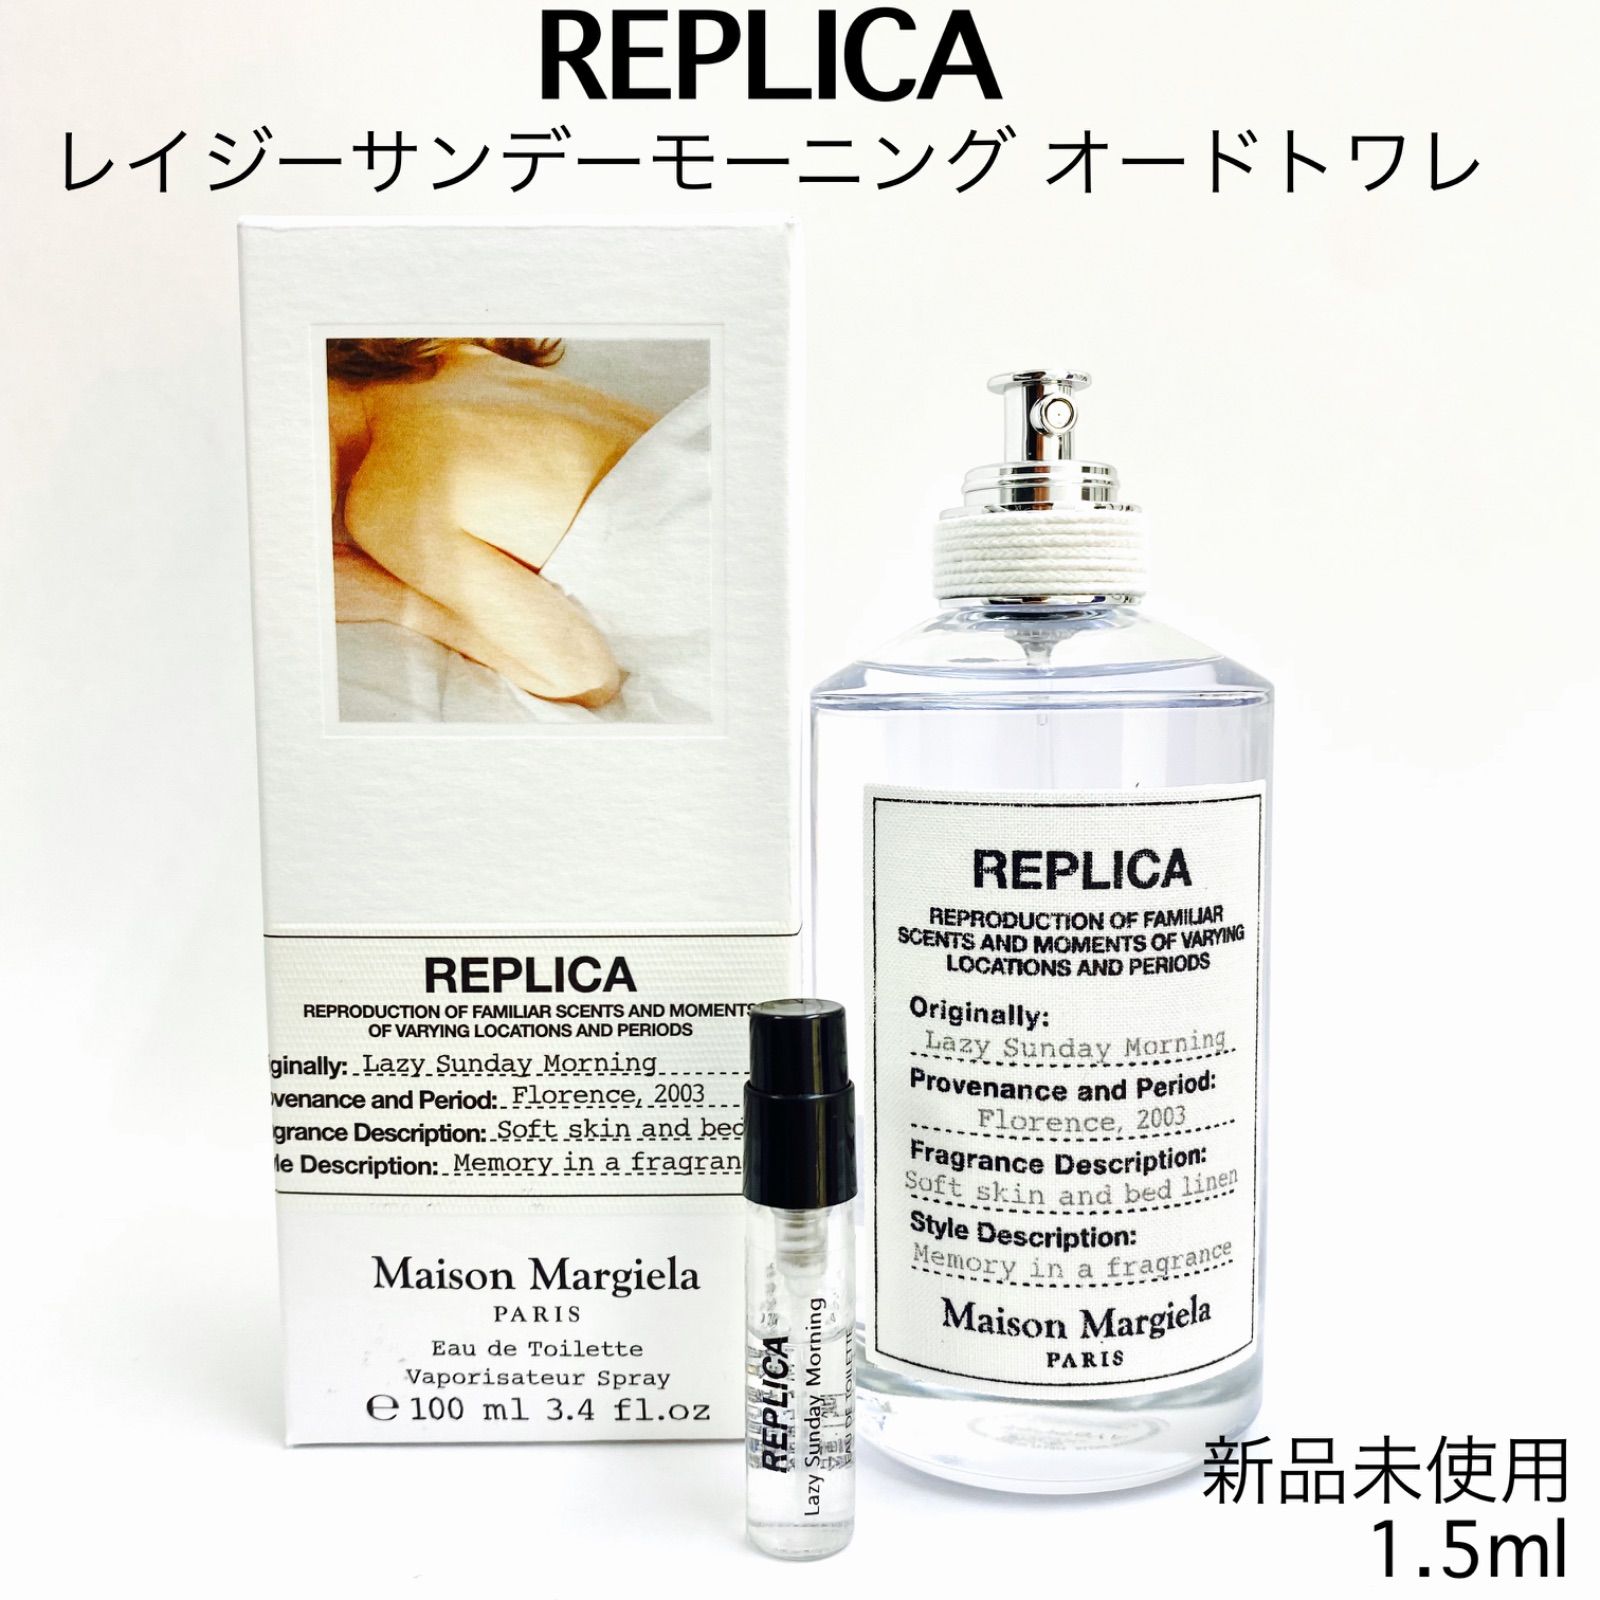 Maison Margiela レイジーサンデーモーニング 1.5mL 最安値 - 香水 